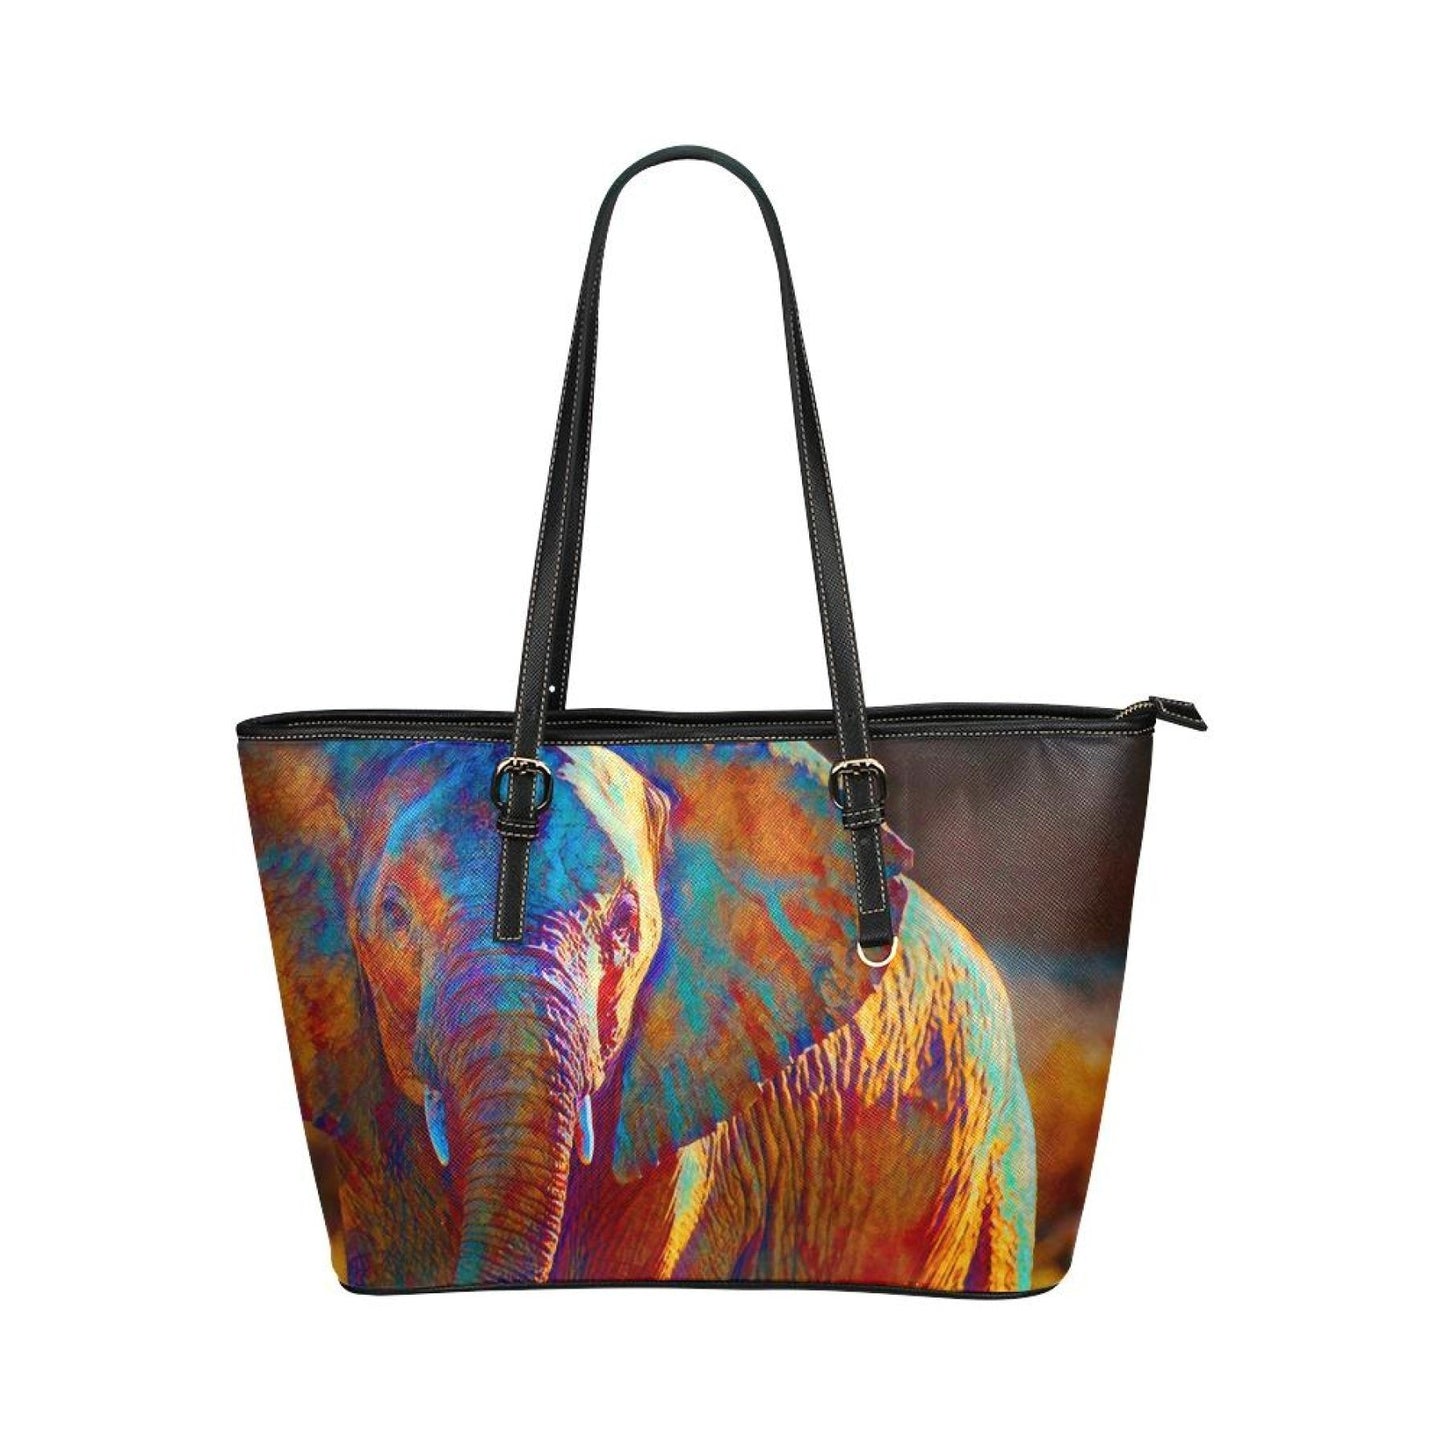 Designer Tote Bags, Colorful Elephant Art Leather Bag